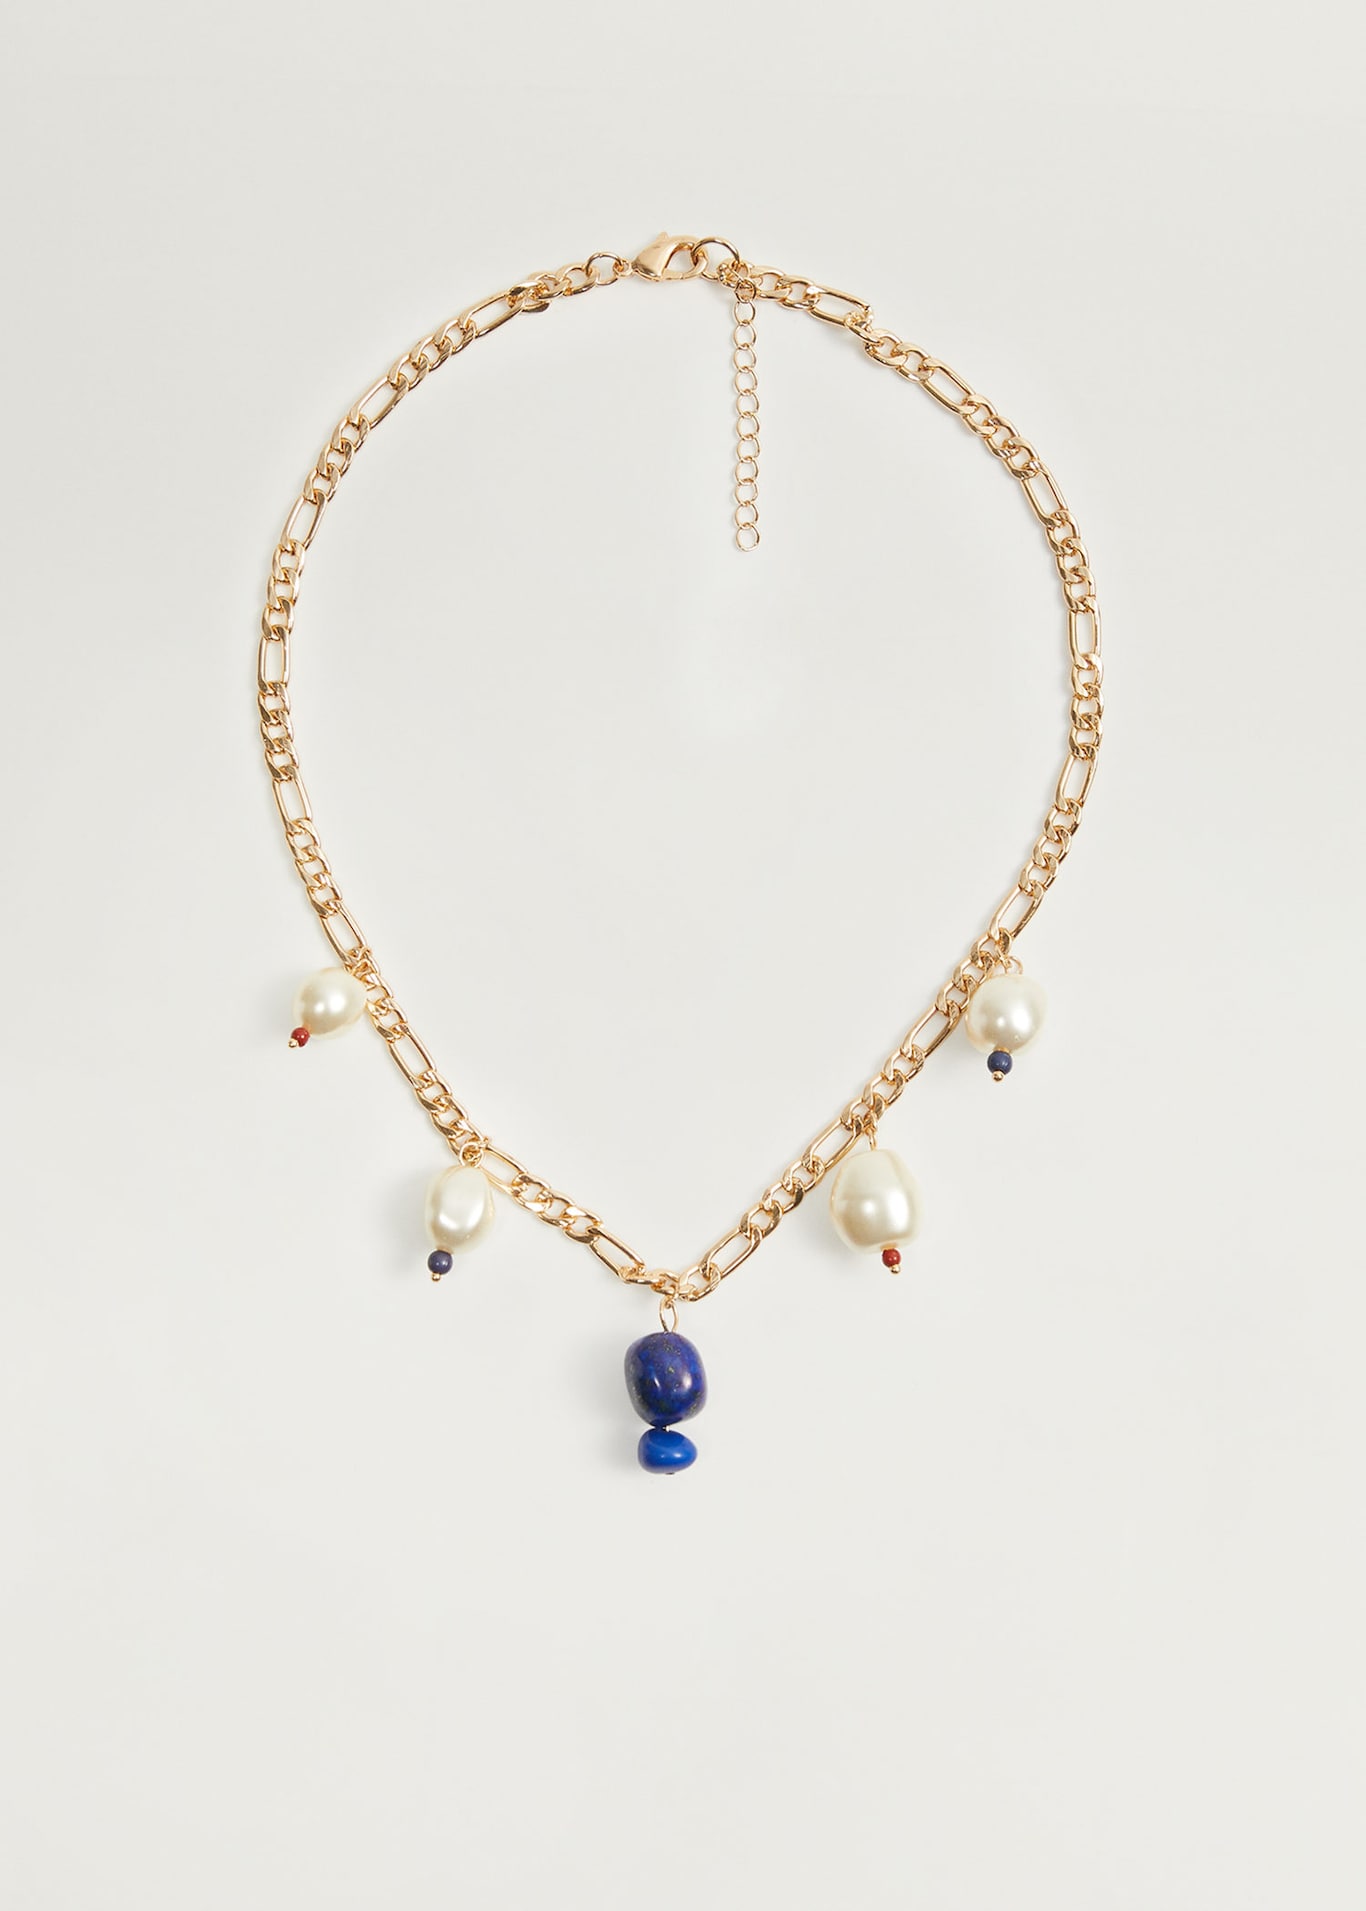 Ожерелье Mango 1799 руб. цена после скидки 1439 руб.